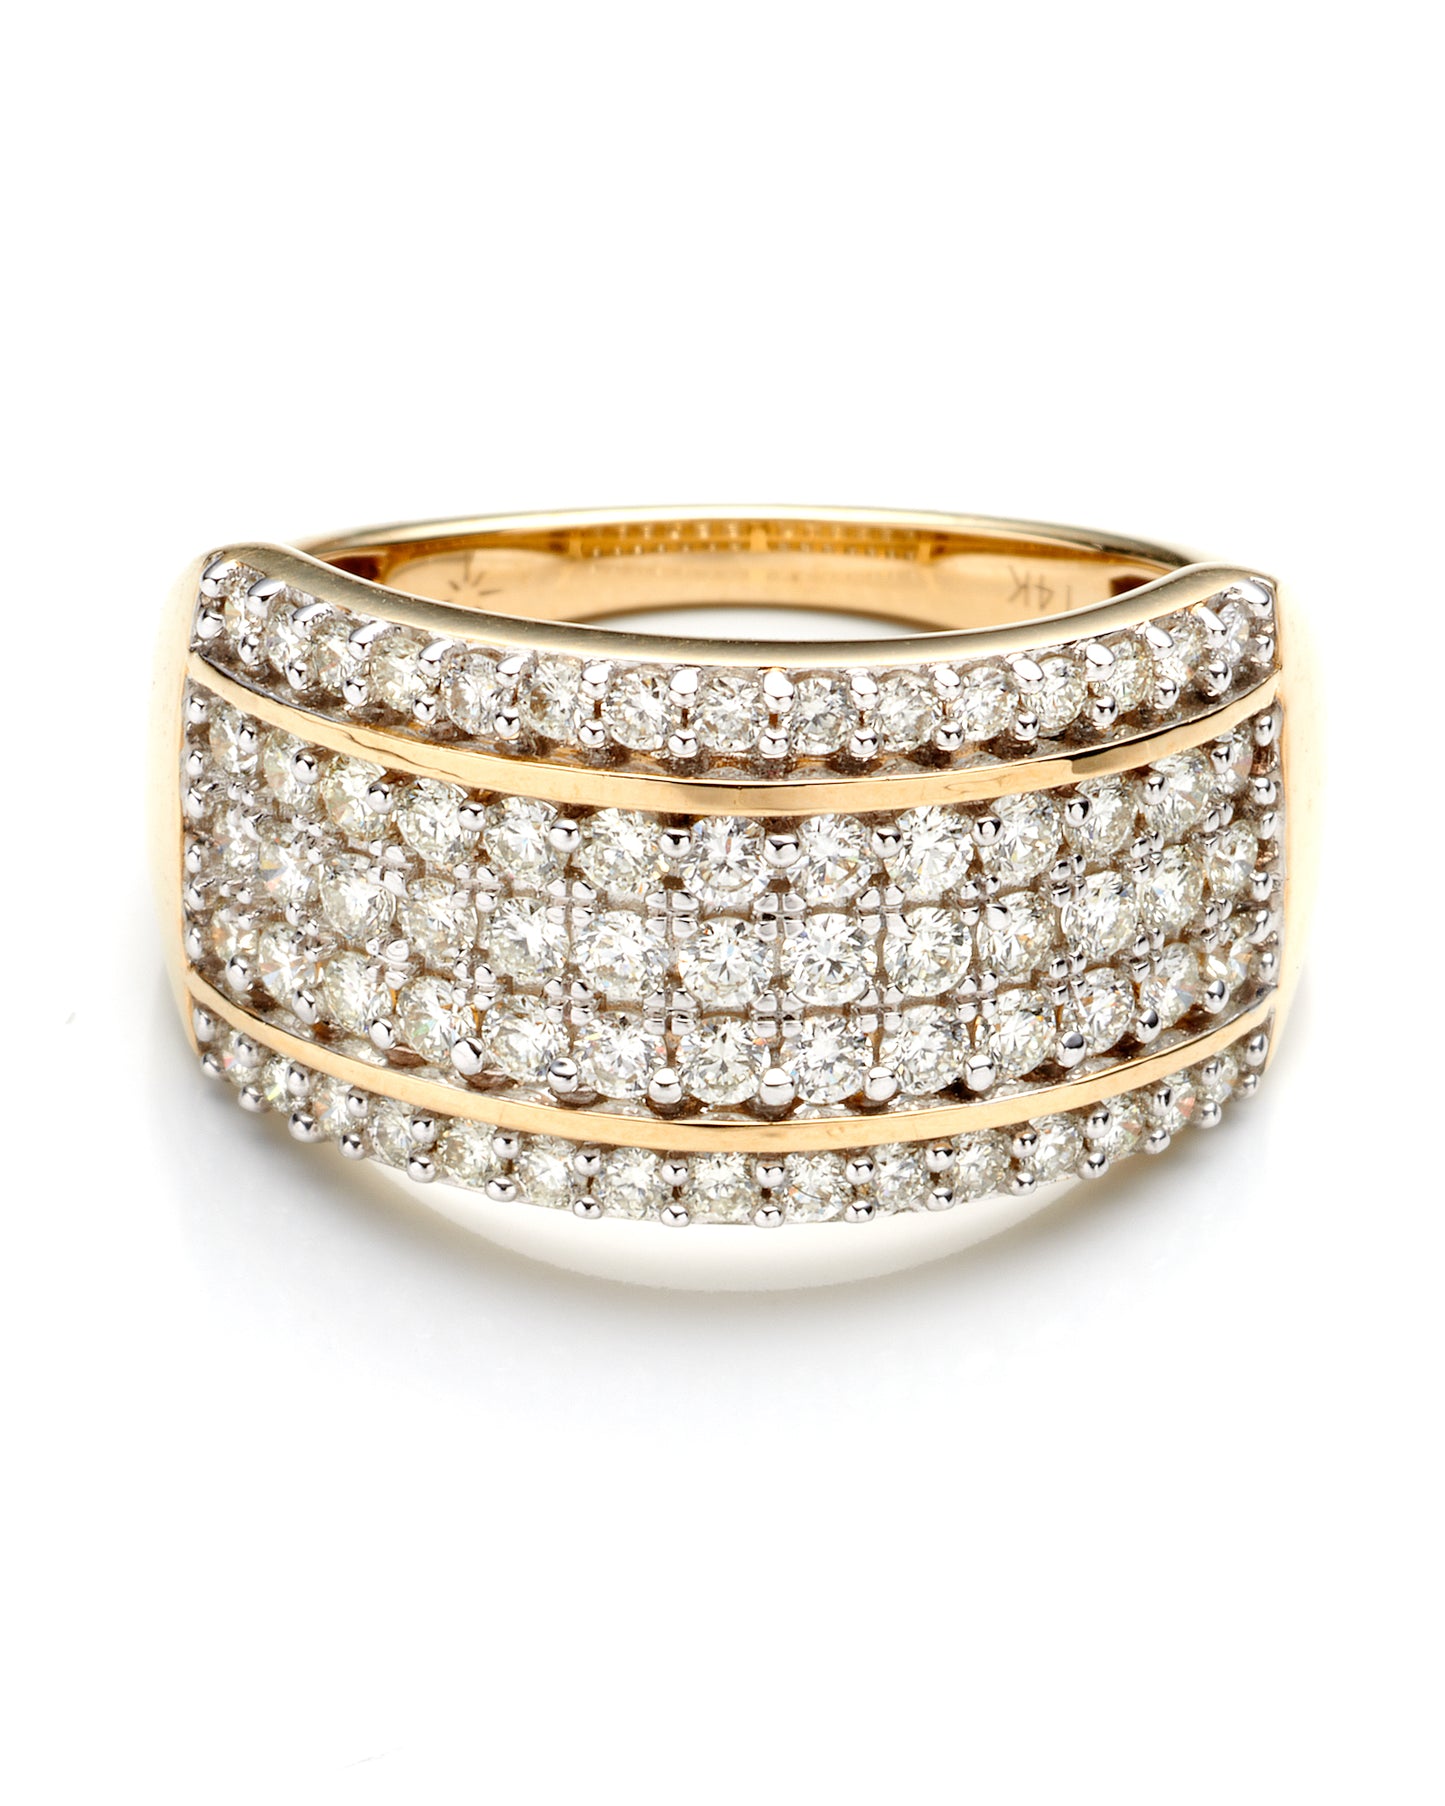 1.0Ctw 14K Yellow Gold Diamond Fashion Ring Size 7 3.2Dwt